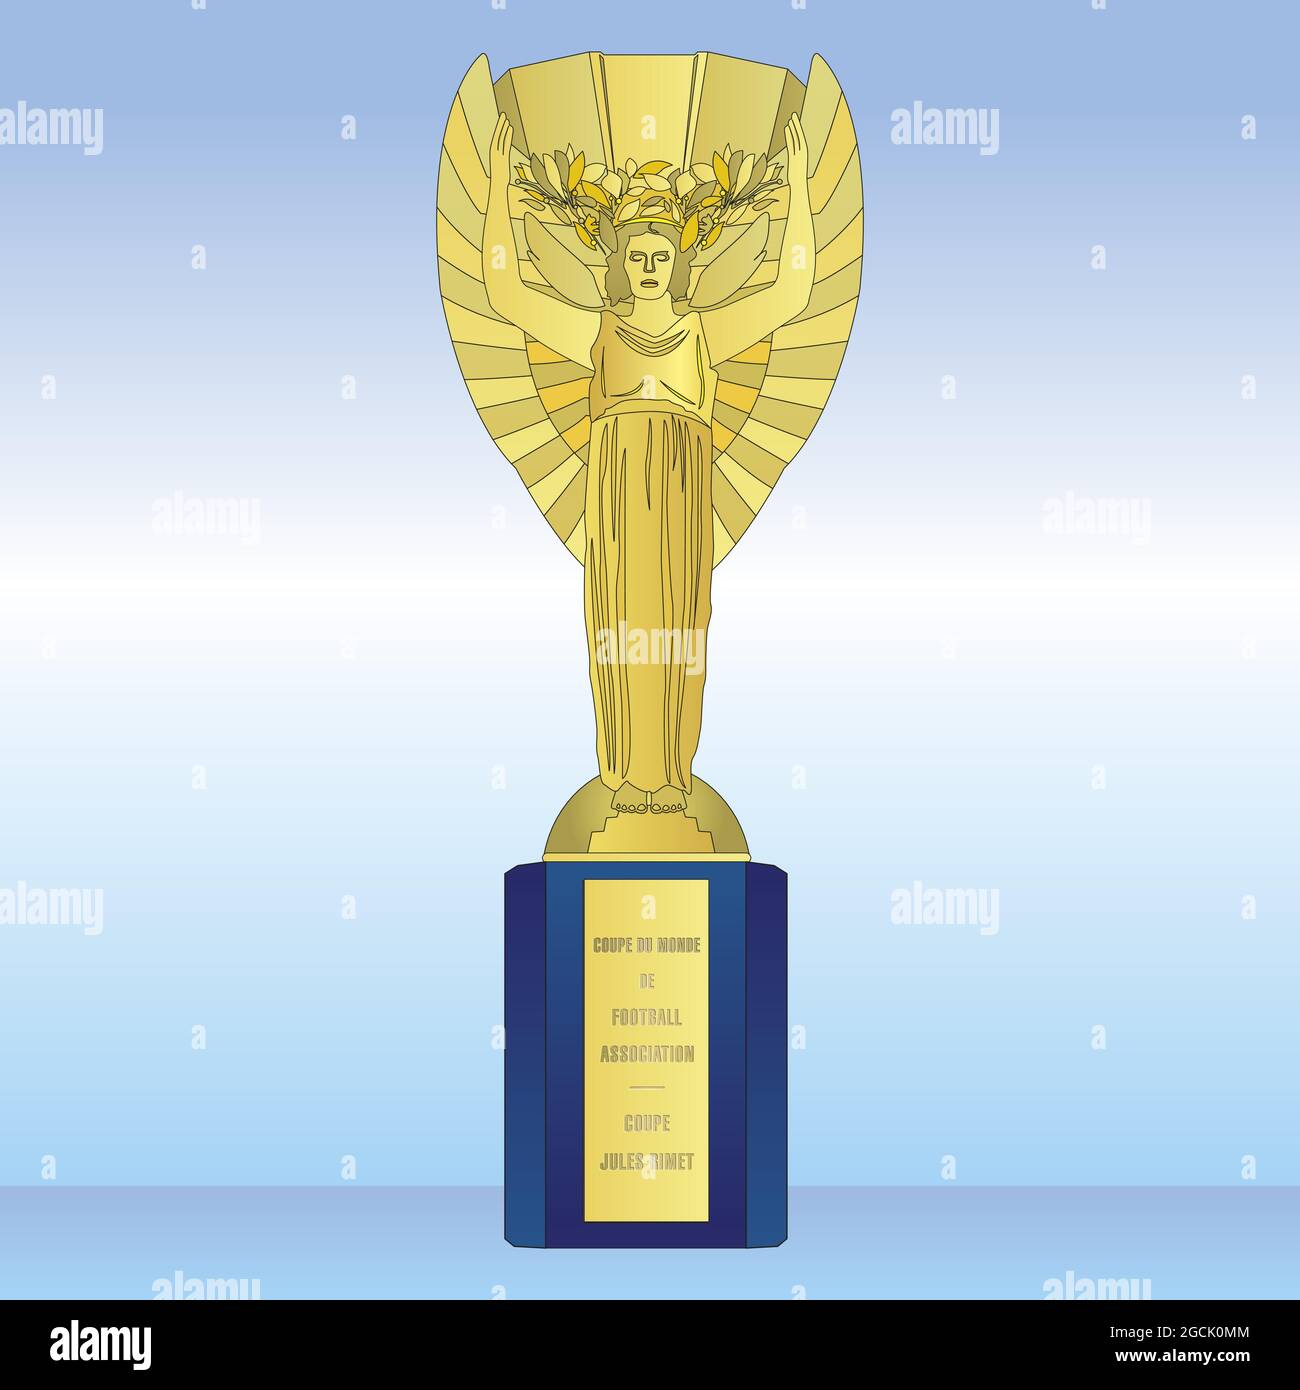 Rimet Cup, old world football championship, vector illustration Stock Vector